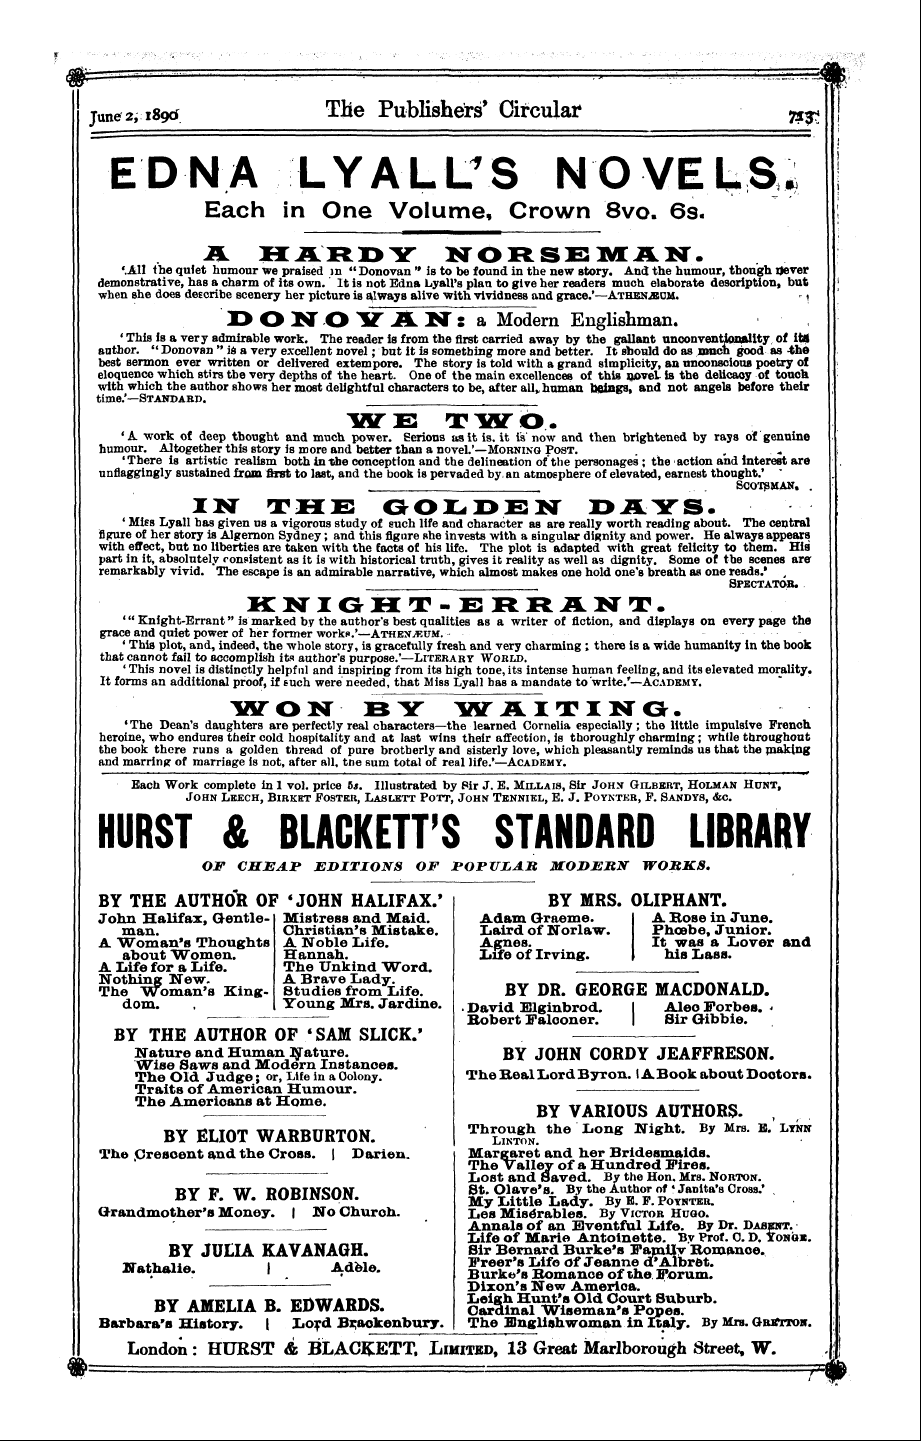 Publishers’ Circular (1880-1890): jS F Y, 1st edition - Ad02501